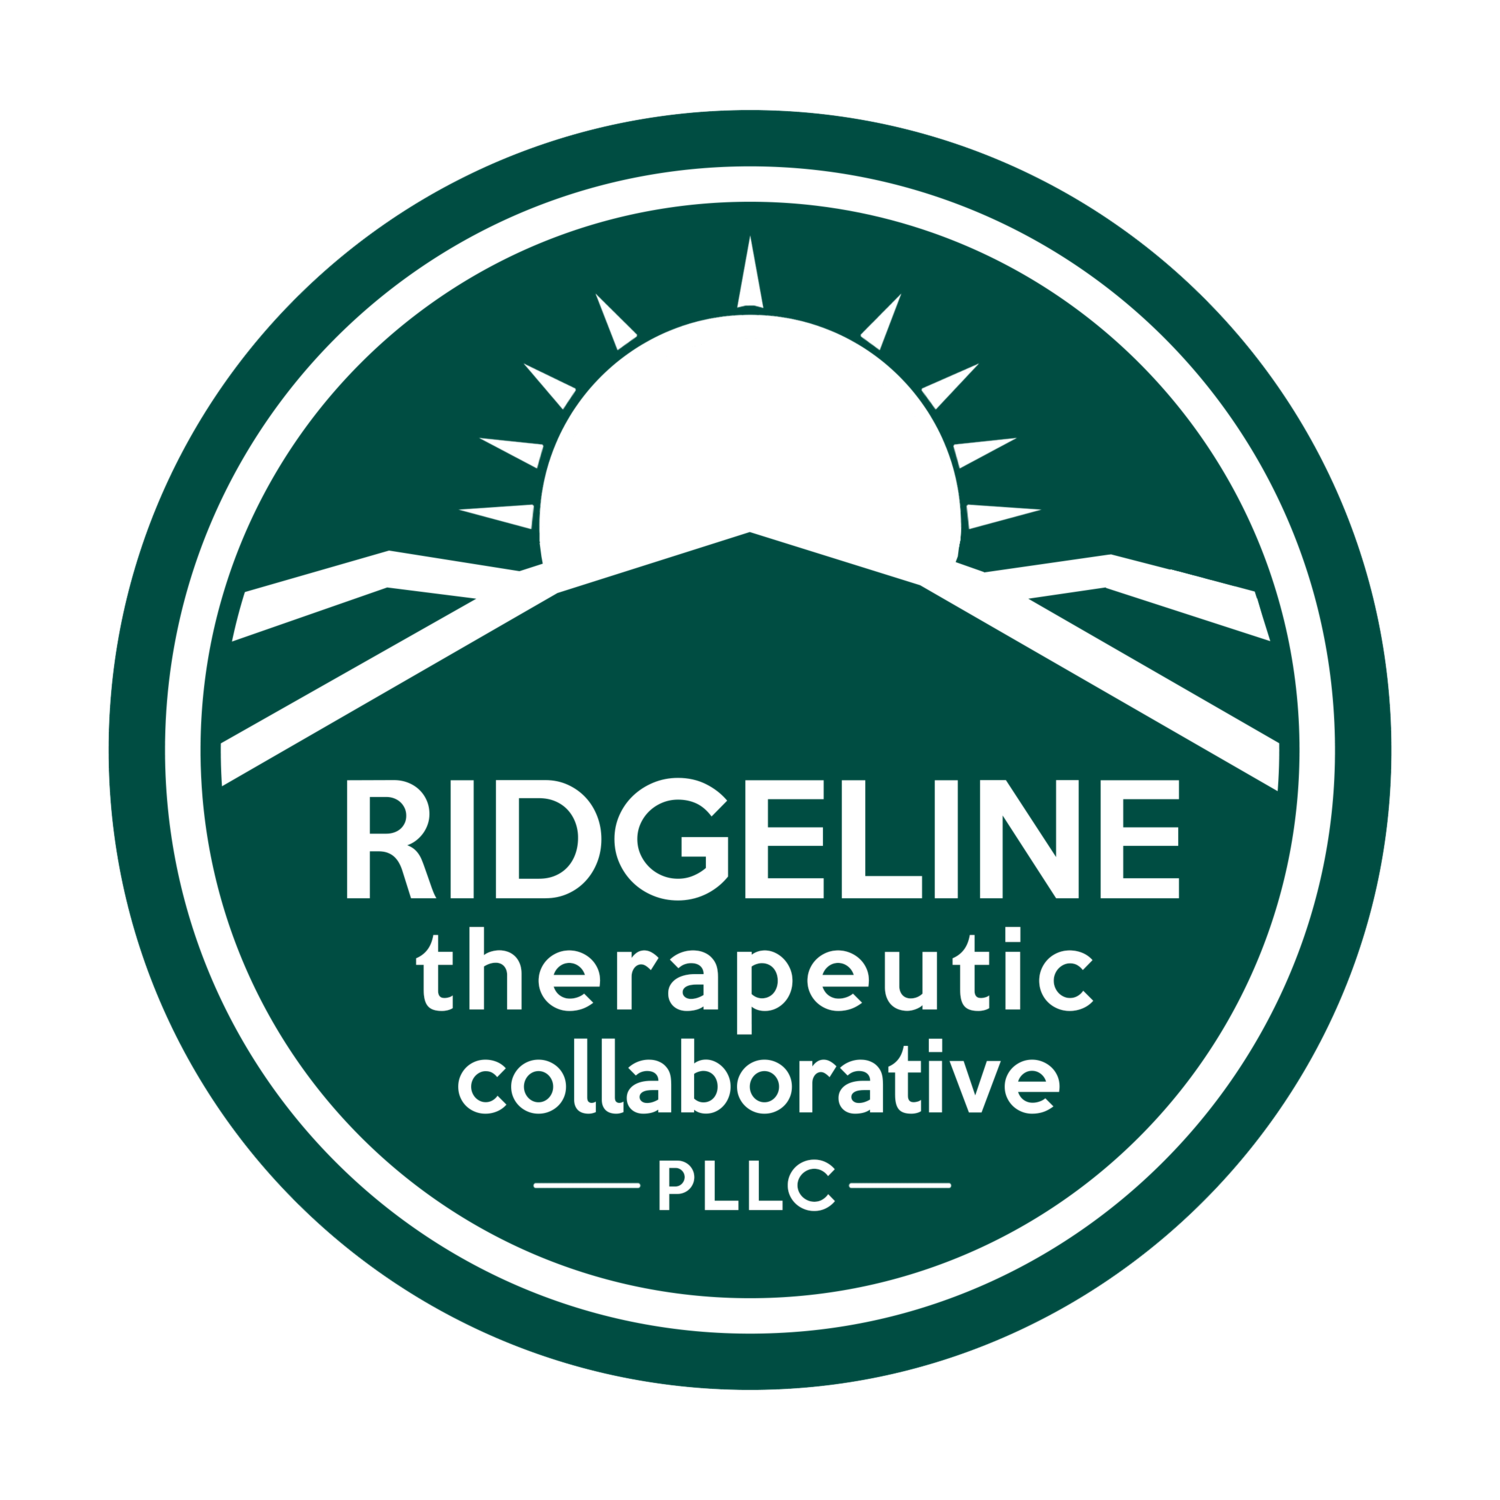 Ridgeline Therapeutic Collaborative, PLLC